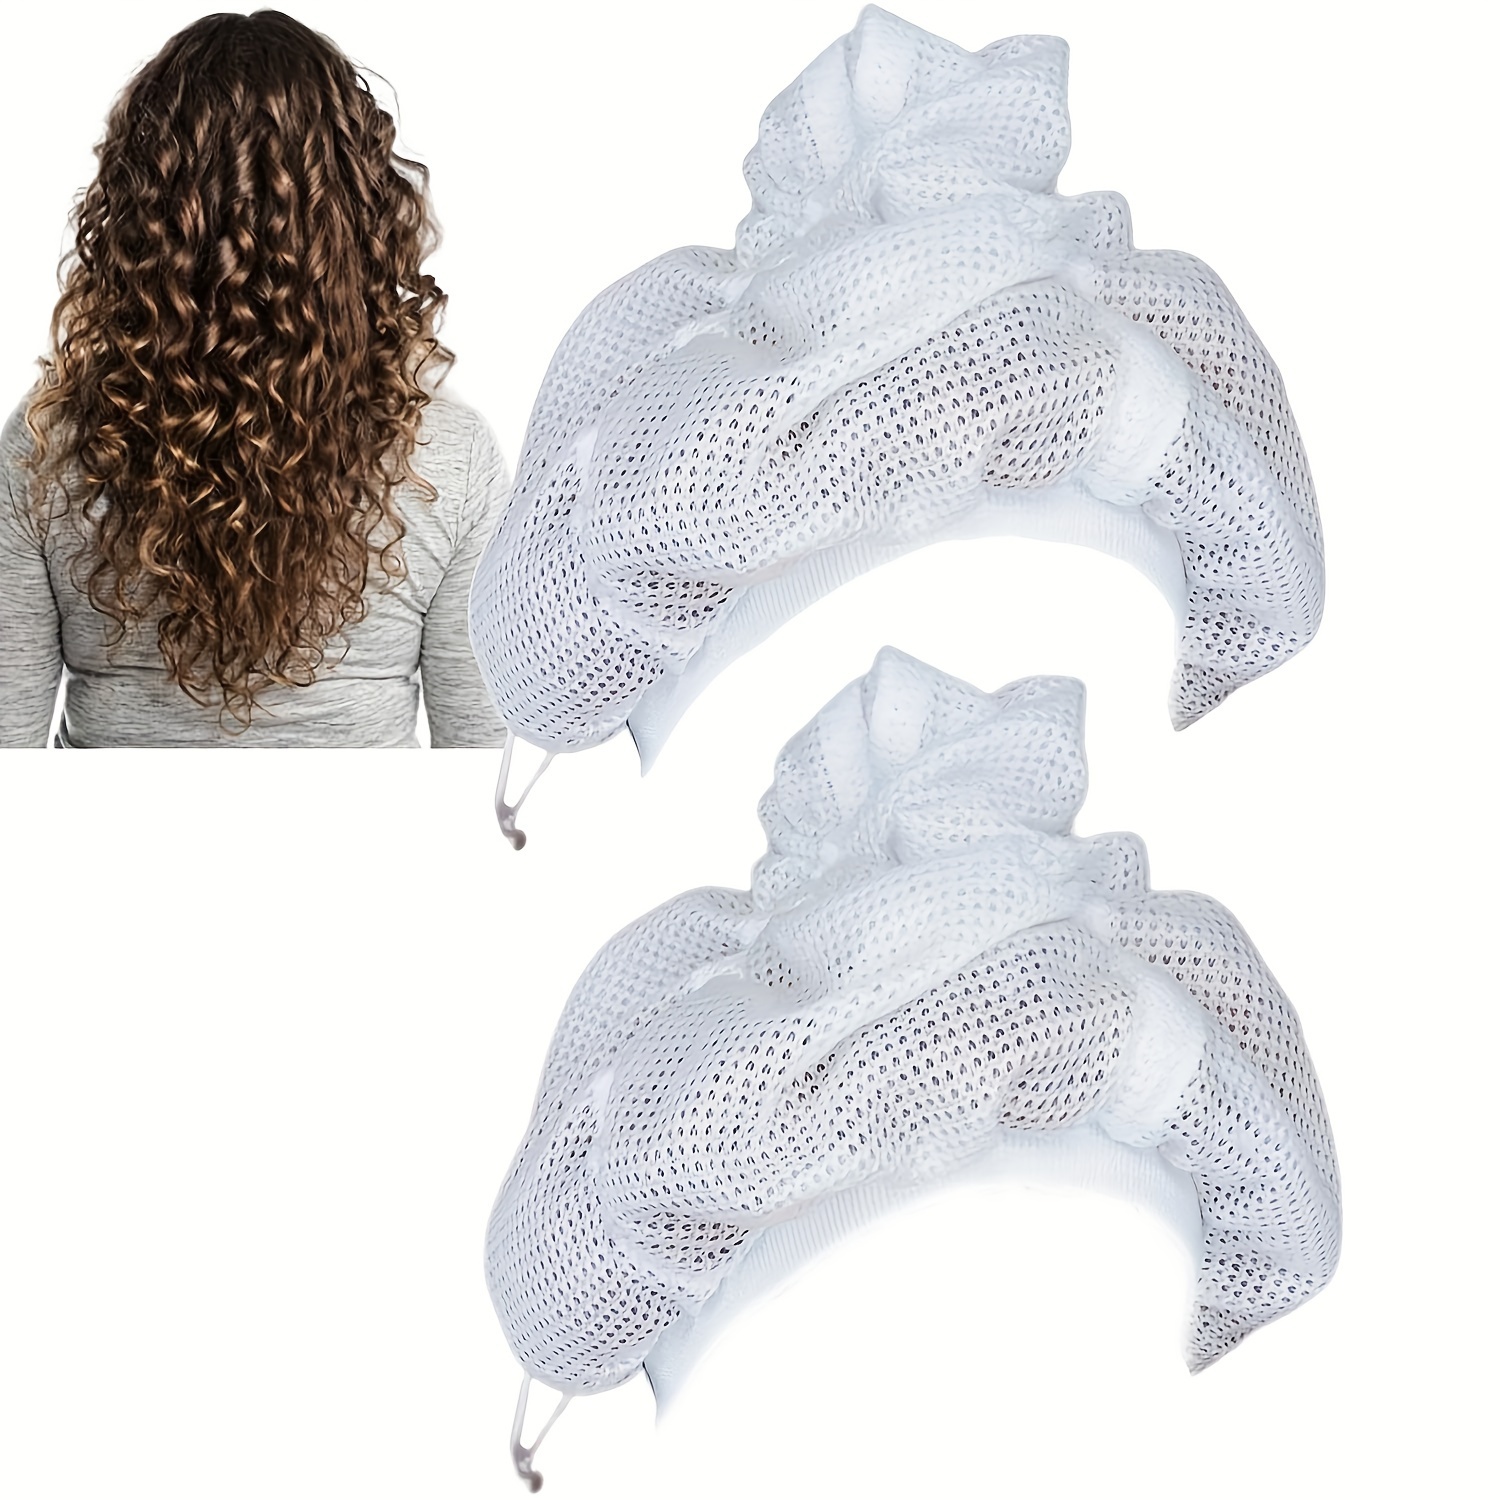  Net Plopping Cap For Drying Curly Hair, Soulta Net Plopping  Bonnet, Soulta Net Plopping Cap With Drawstring Adjustable Hair Bonnet Mesh  Hair Drying Bonnet, Net Plopping Satin Diffuser Cap (Black) 